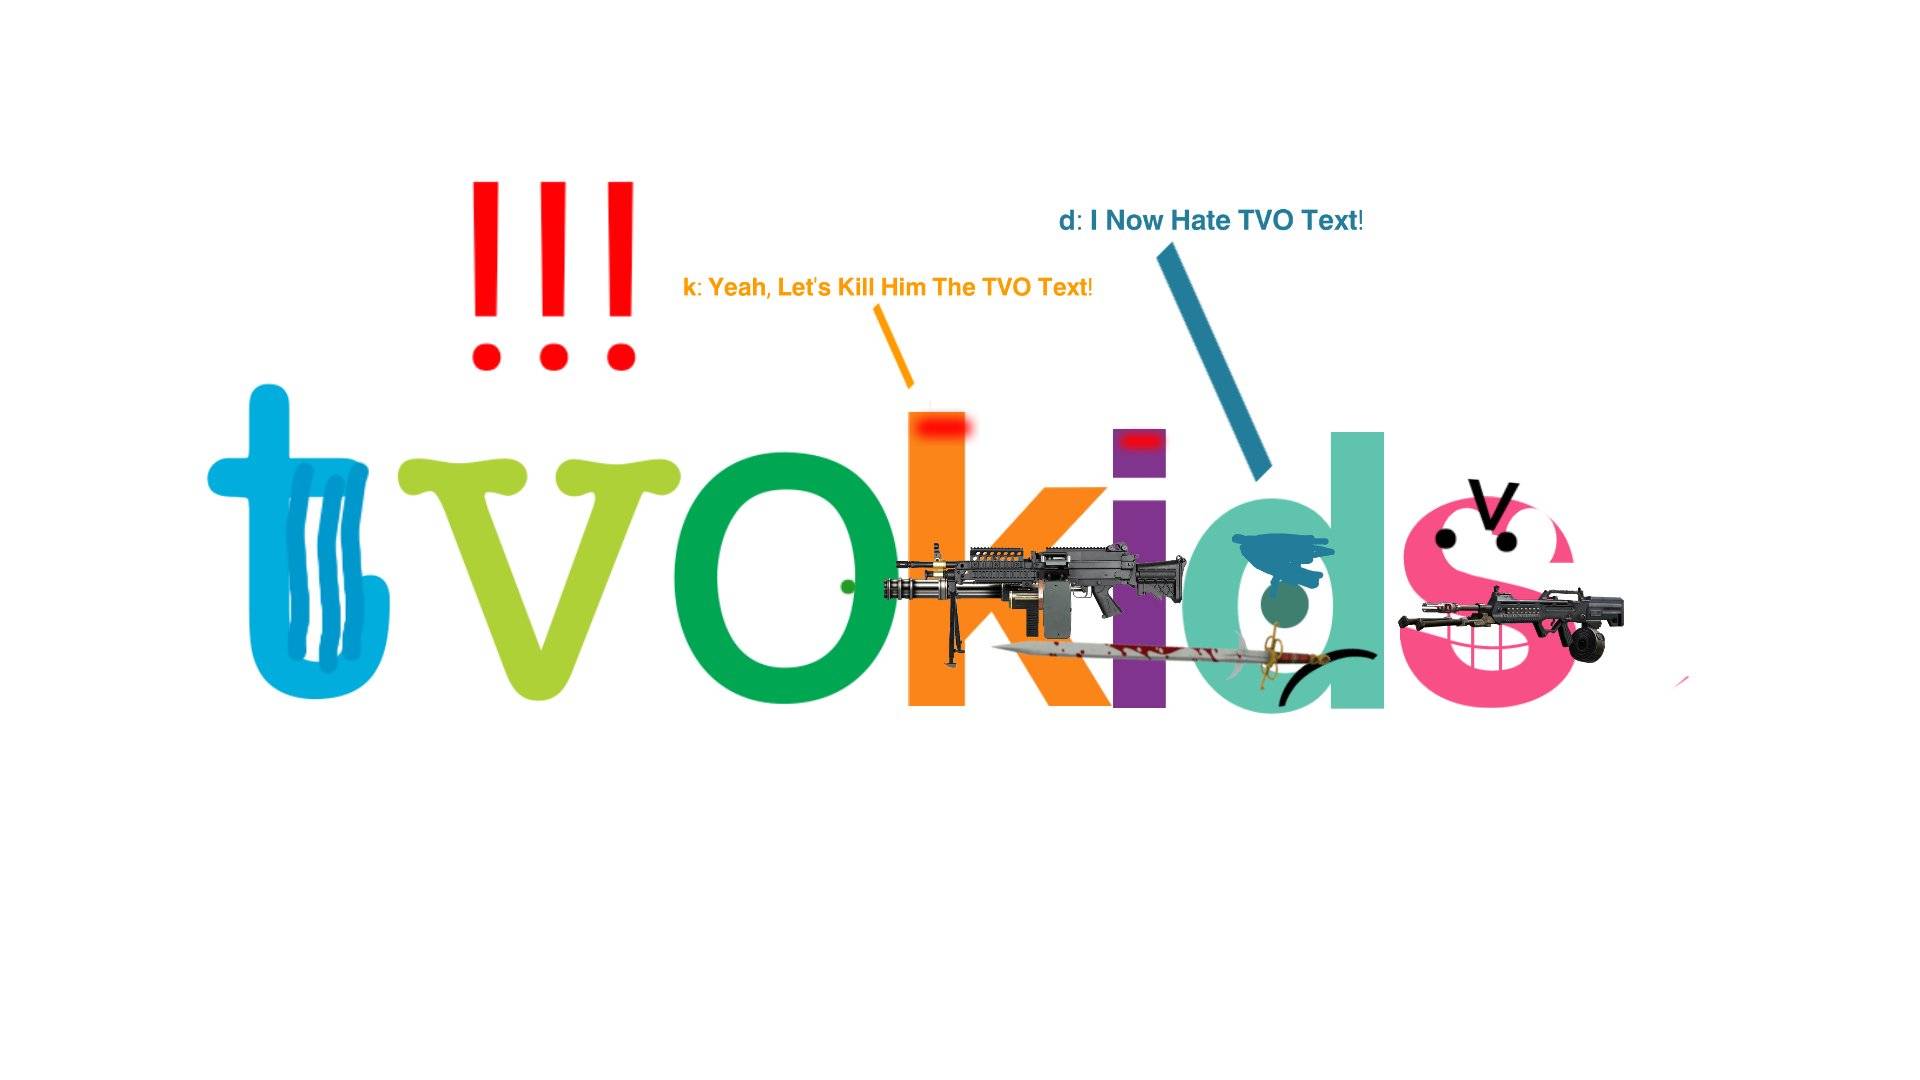 TVOKids Logo Bloopers for +13 Only Wallpaper by SusalynnArt on DeviantArt